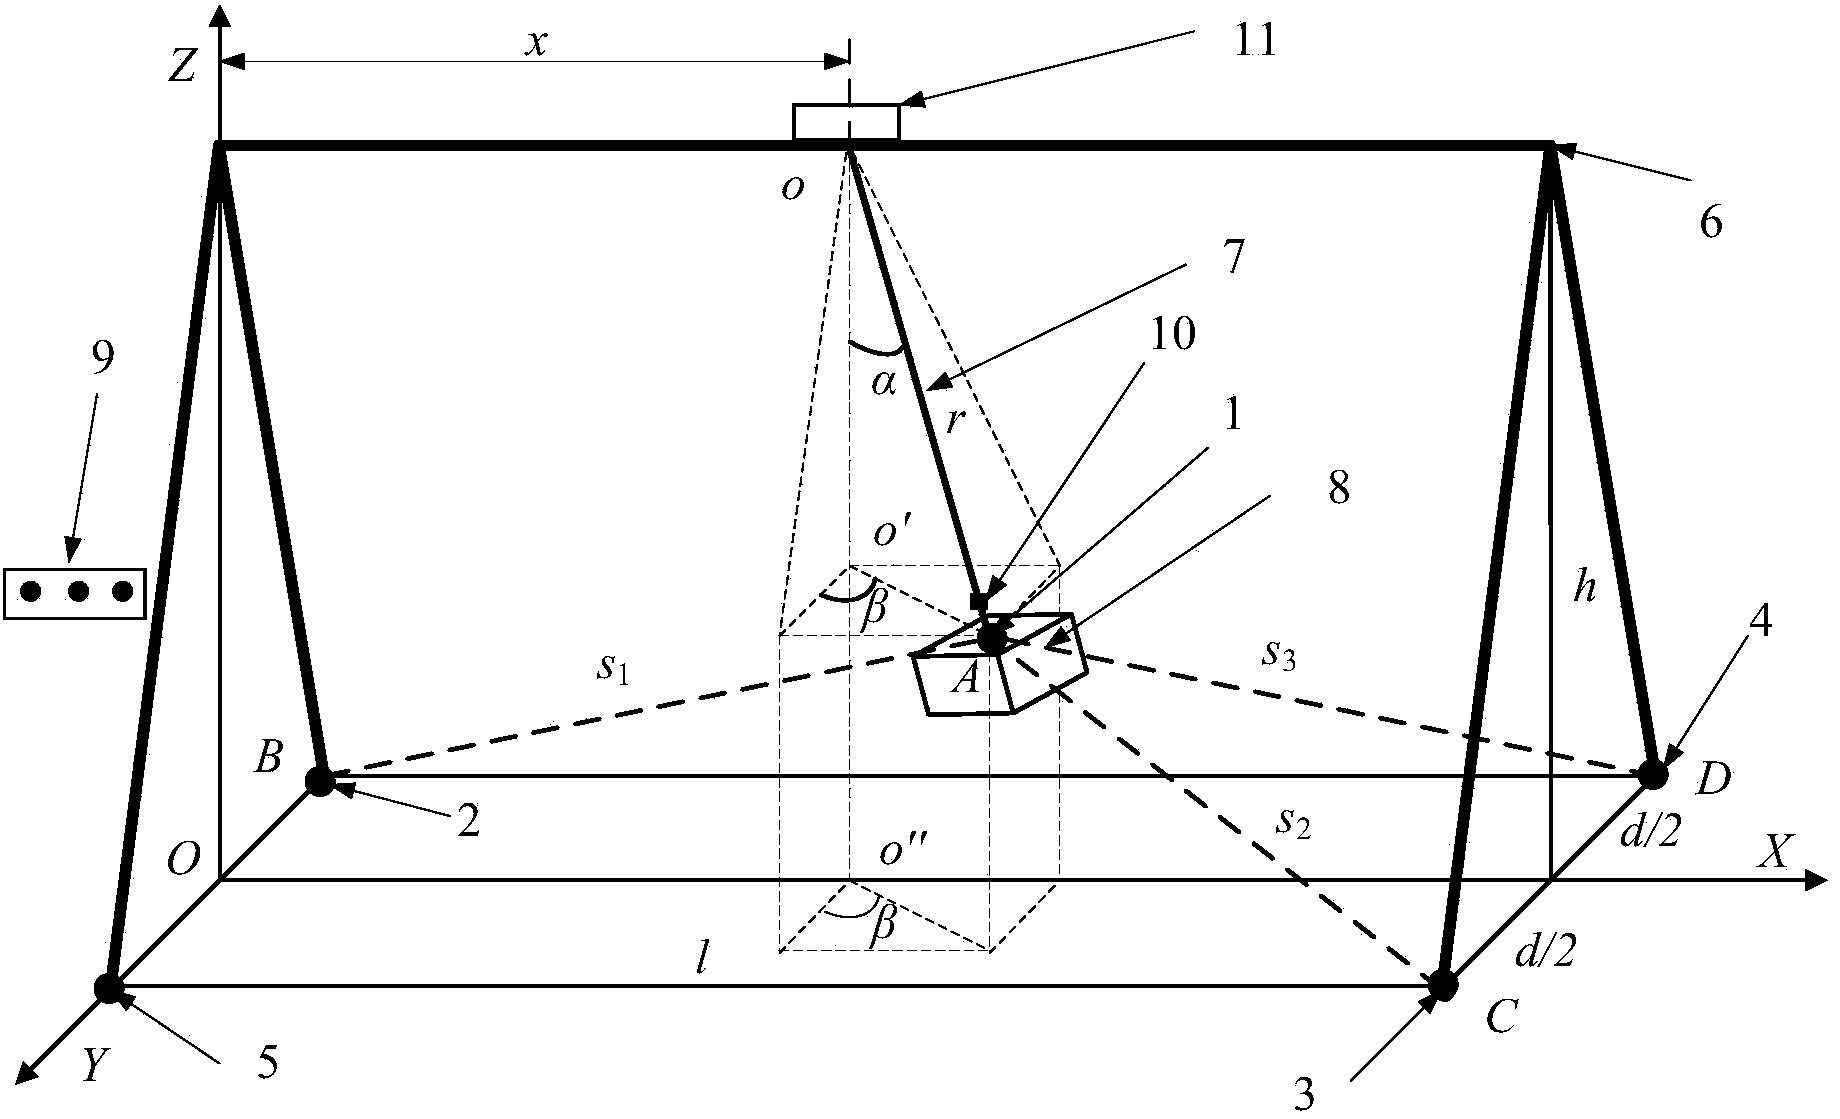 Method for detecting load swinging angle of crane